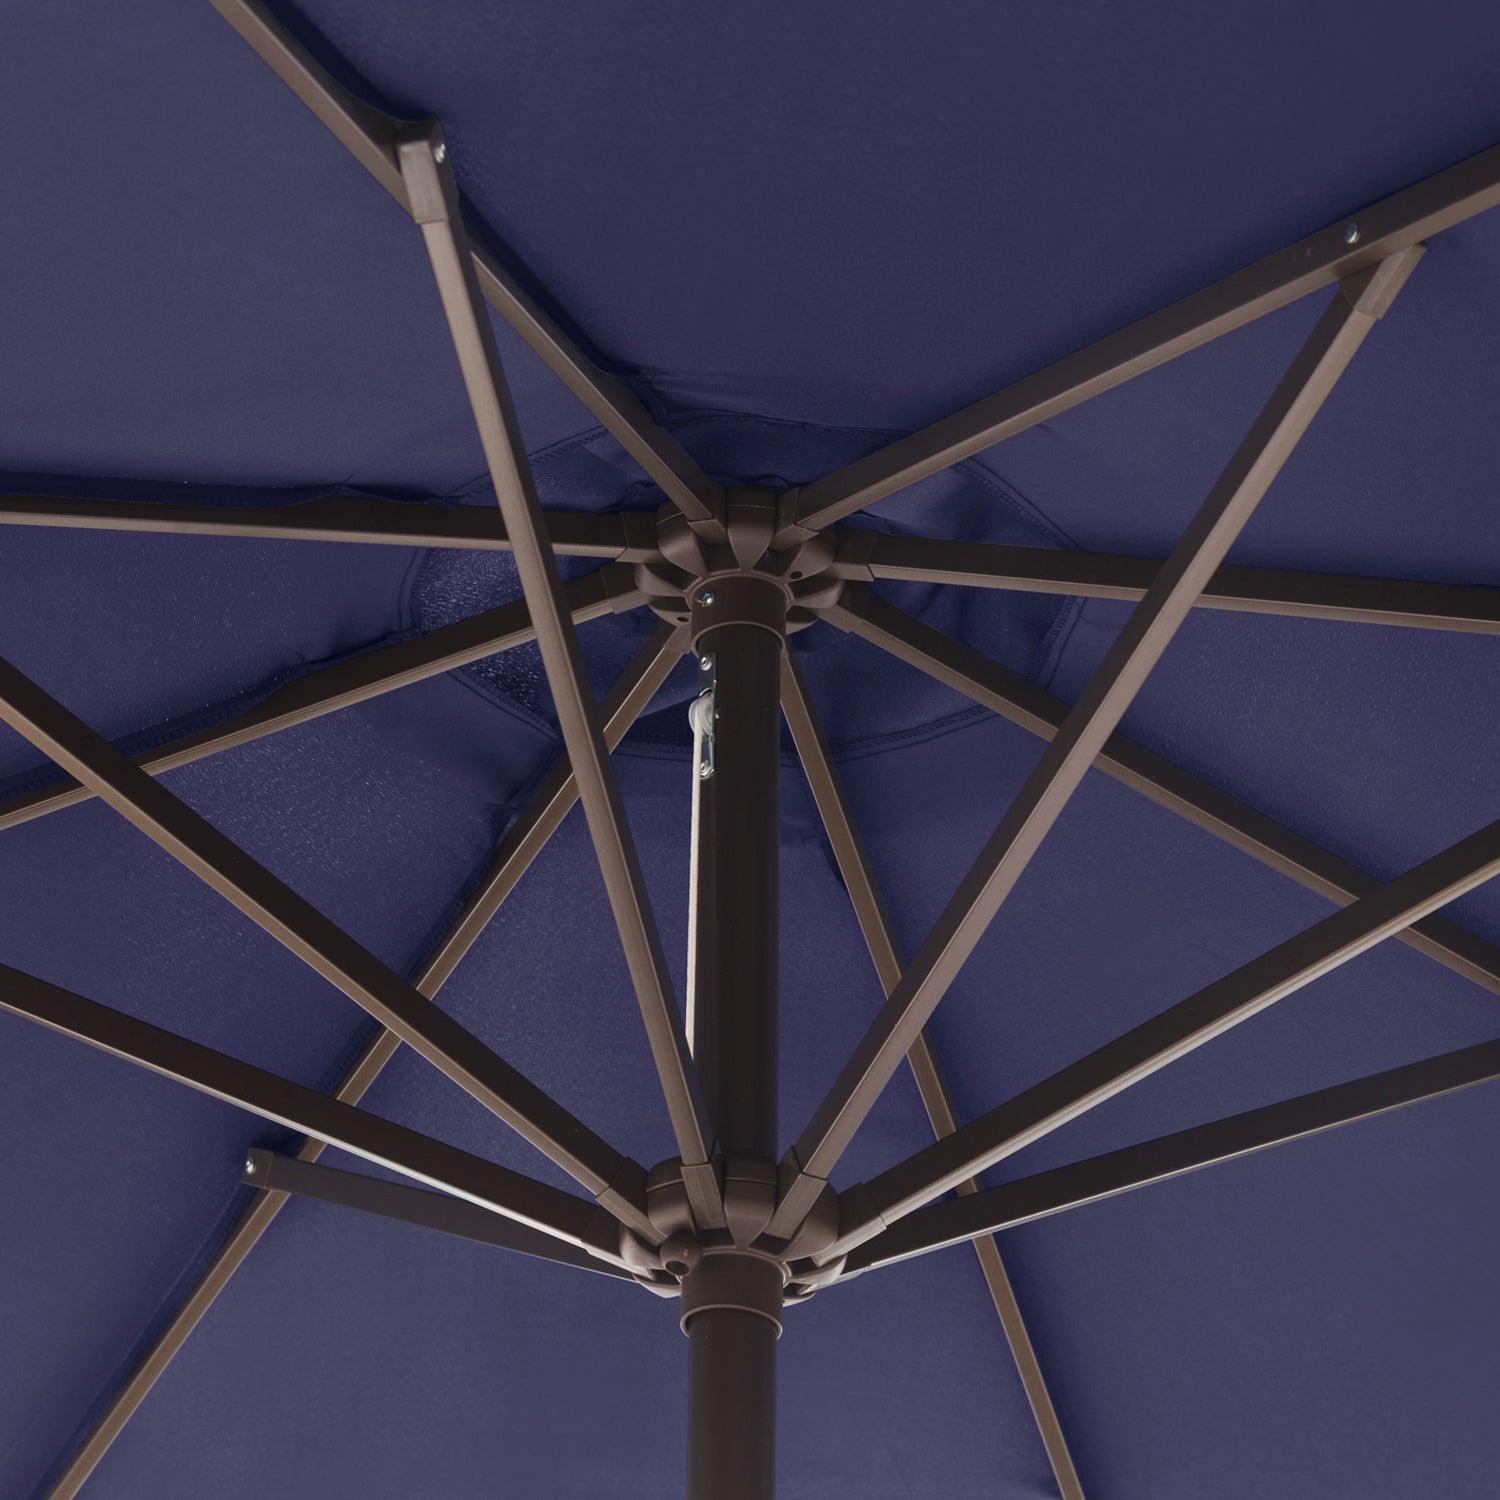 Cabana 9 Ft Patio Umbrella with Tilt & Crank - Costaelm